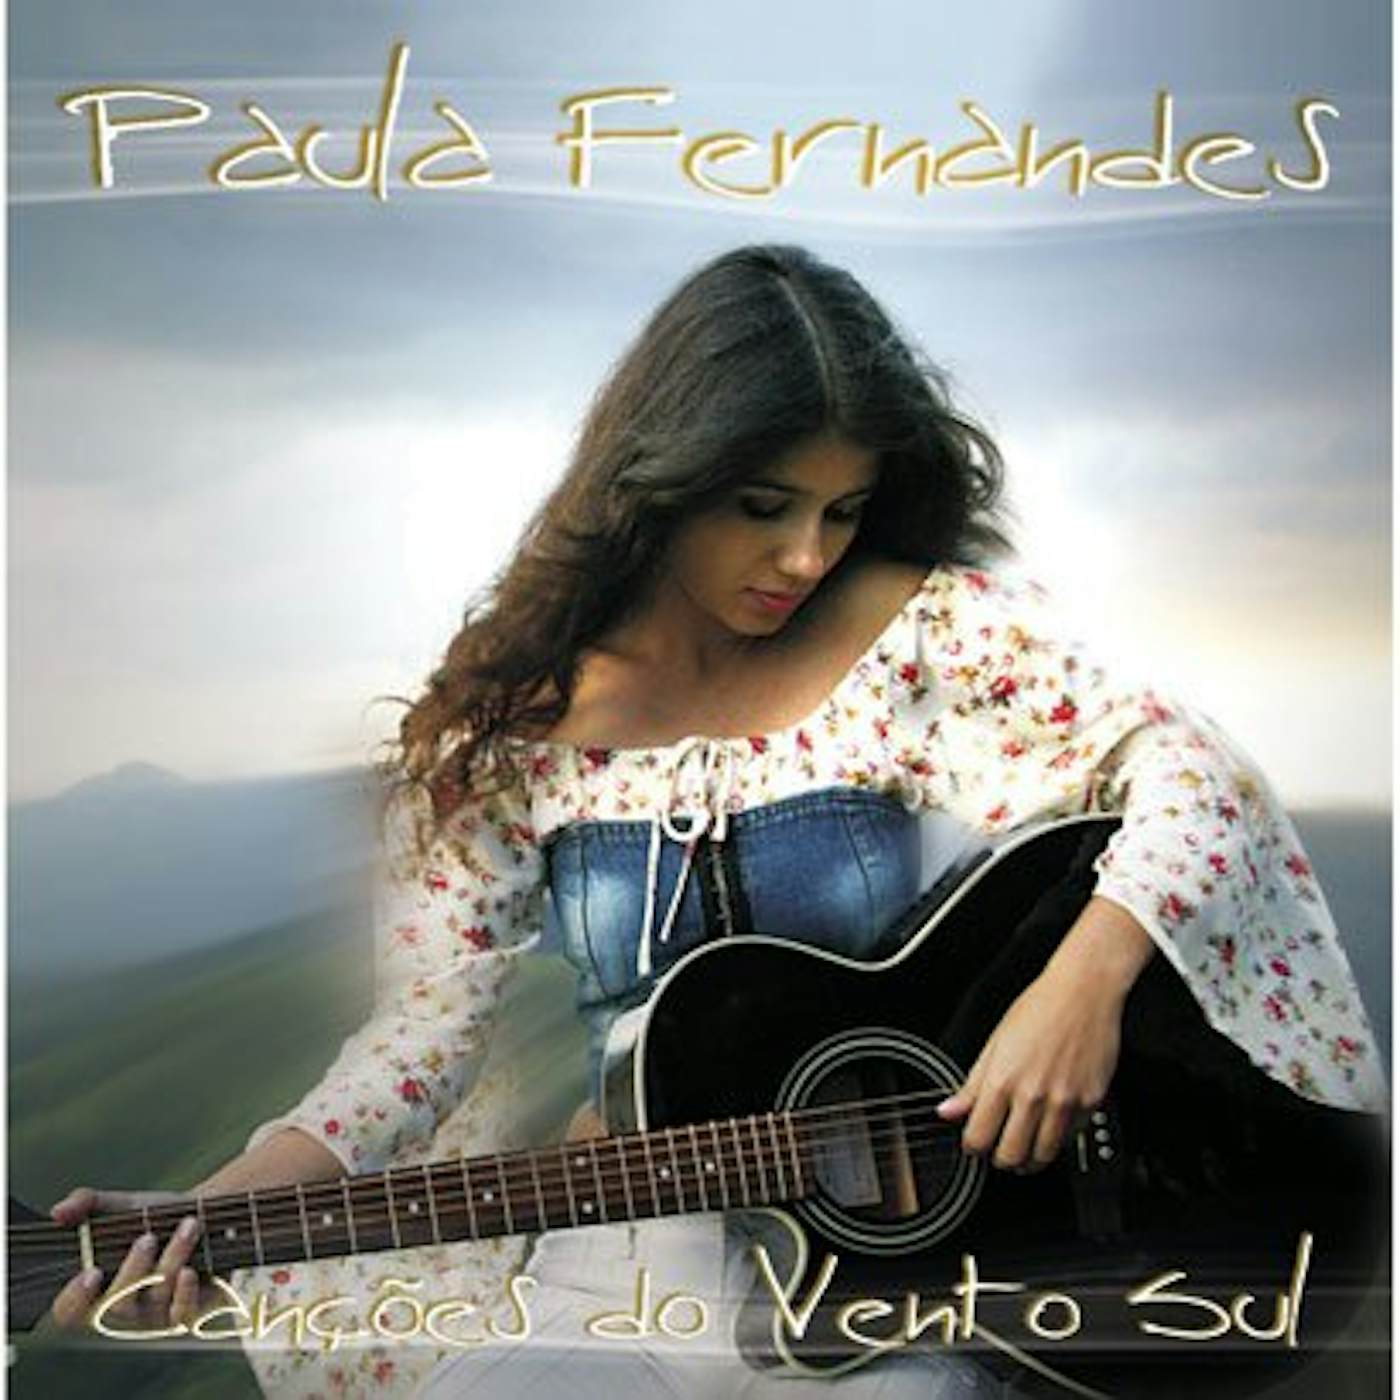 Paula Fernandes CANCOES DO VENTO SUL CD